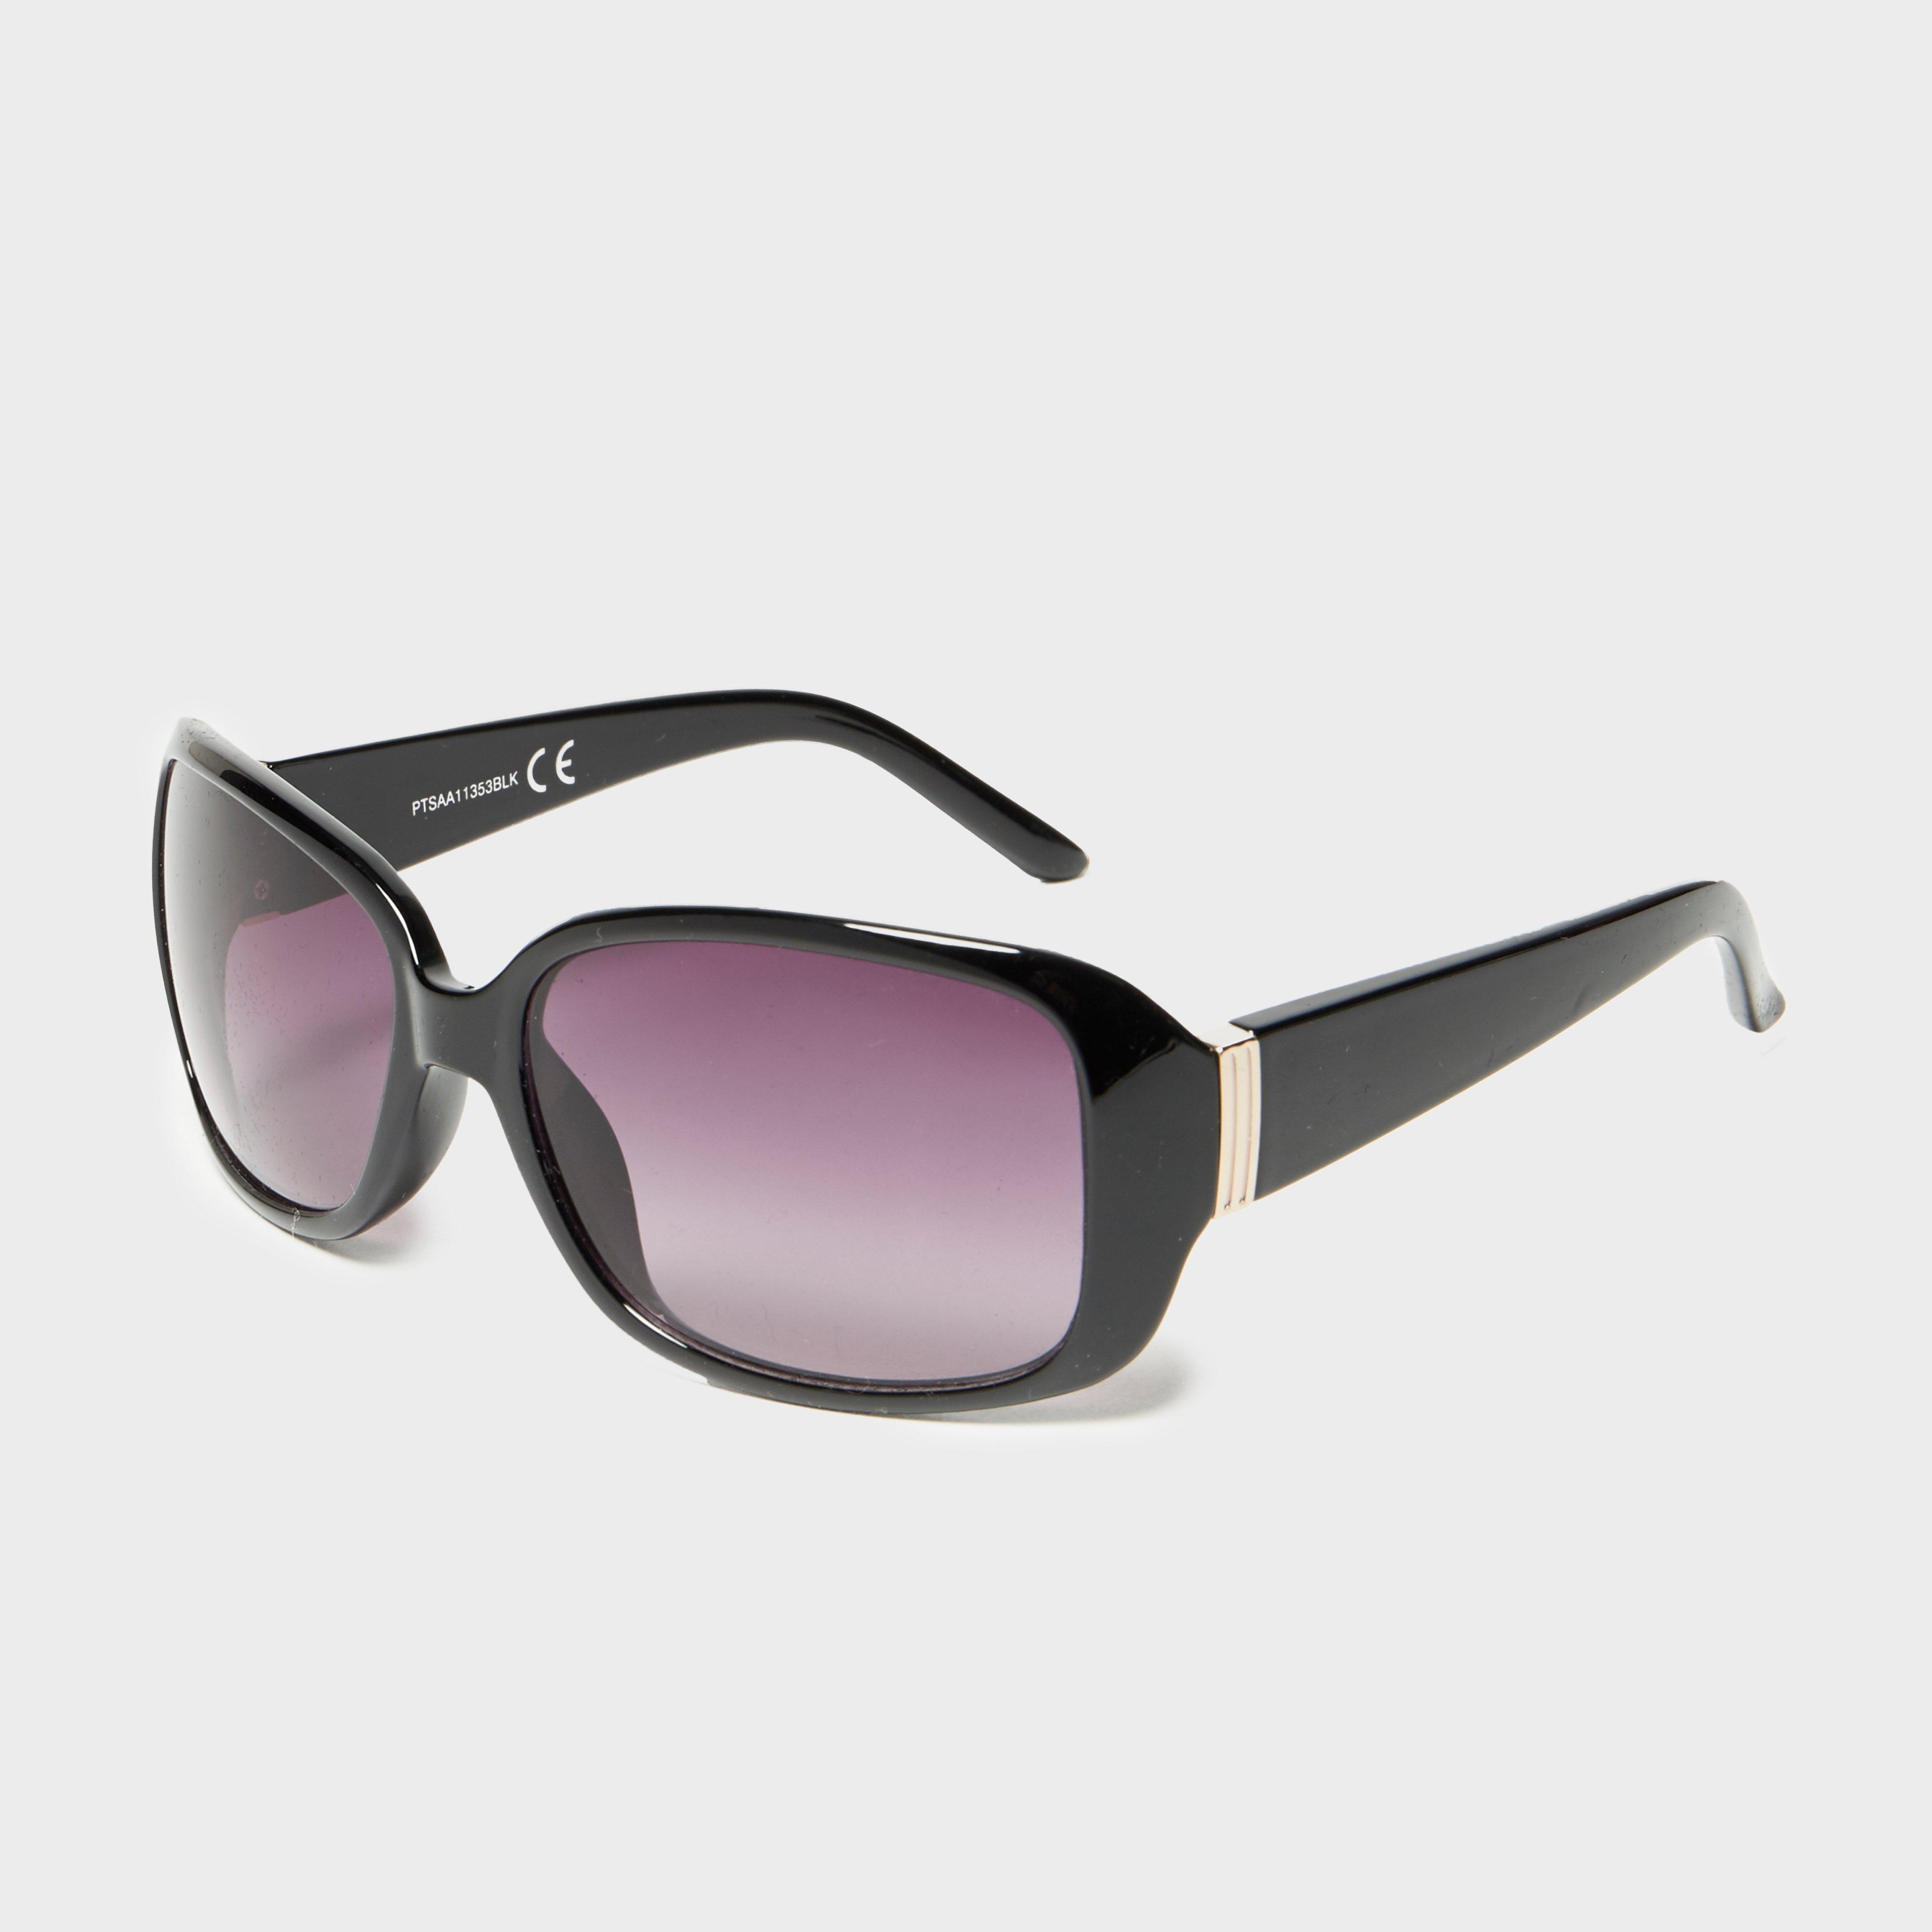 Peter Storm Womens Square Sunglasses - Black/blk  Black/blk